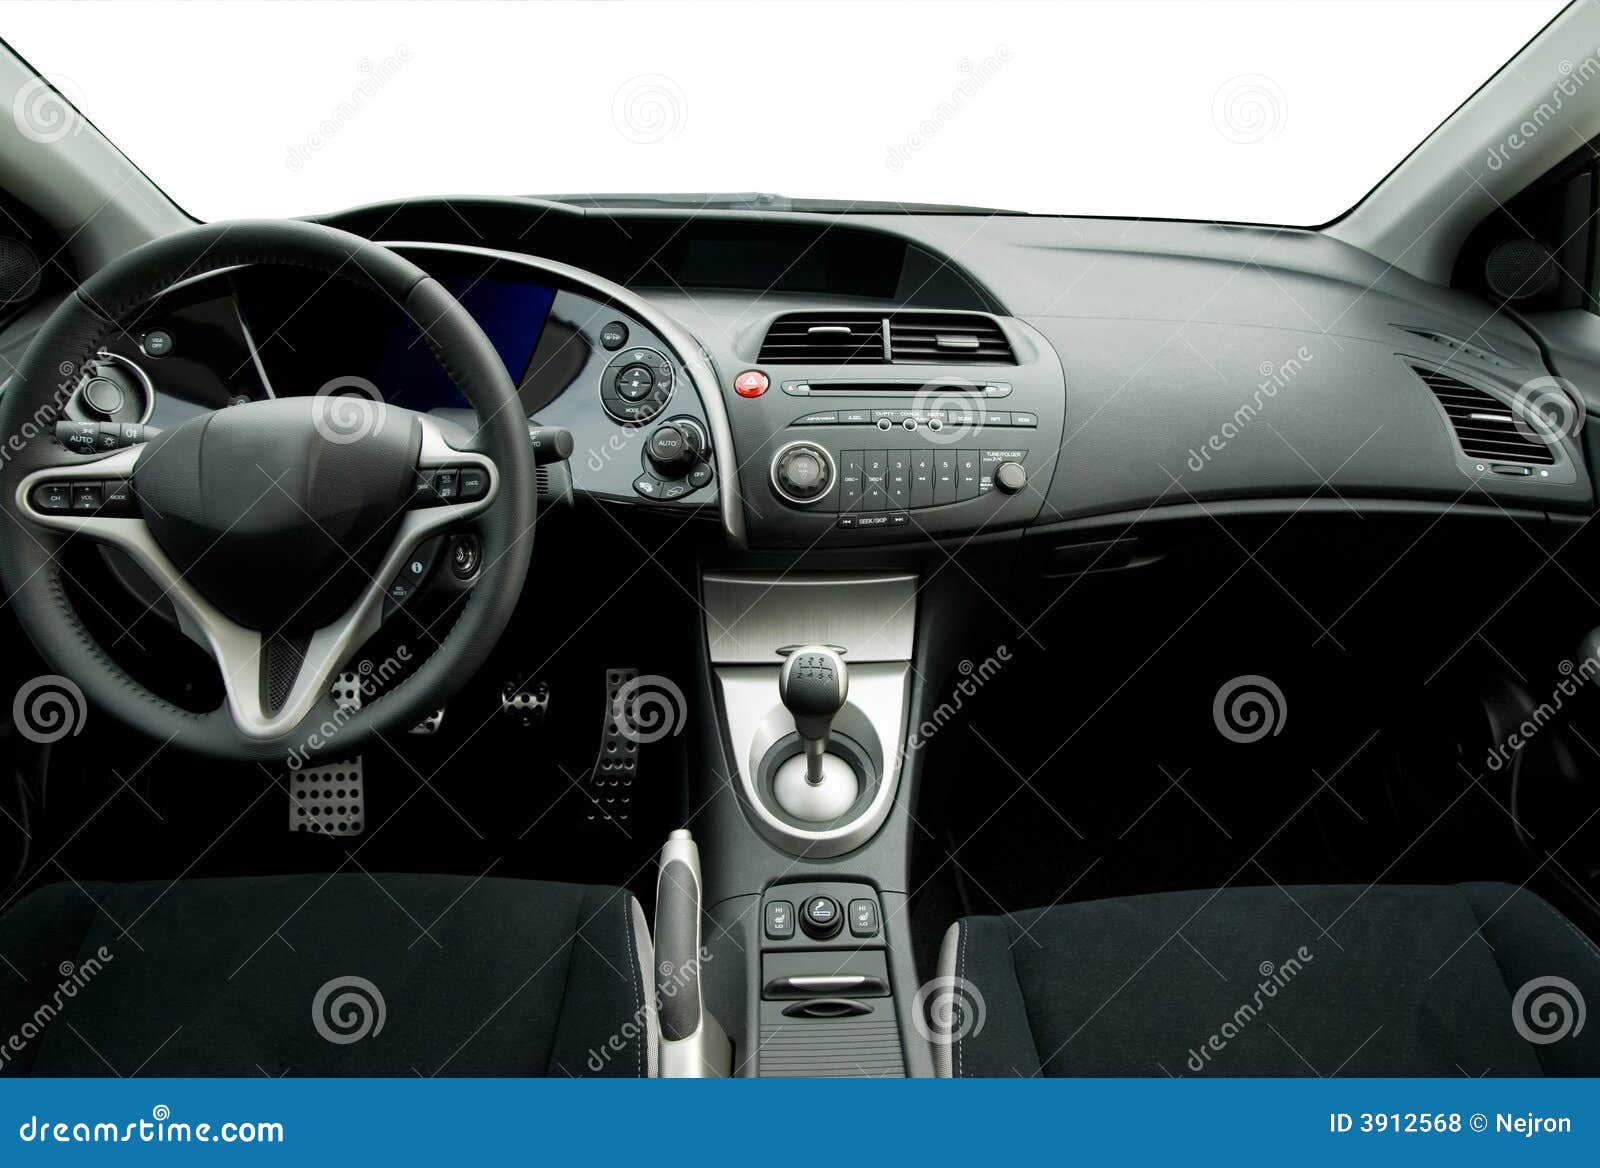 Modern Sport Car Interior Royalty Free Stock Photos  Image: 3912568